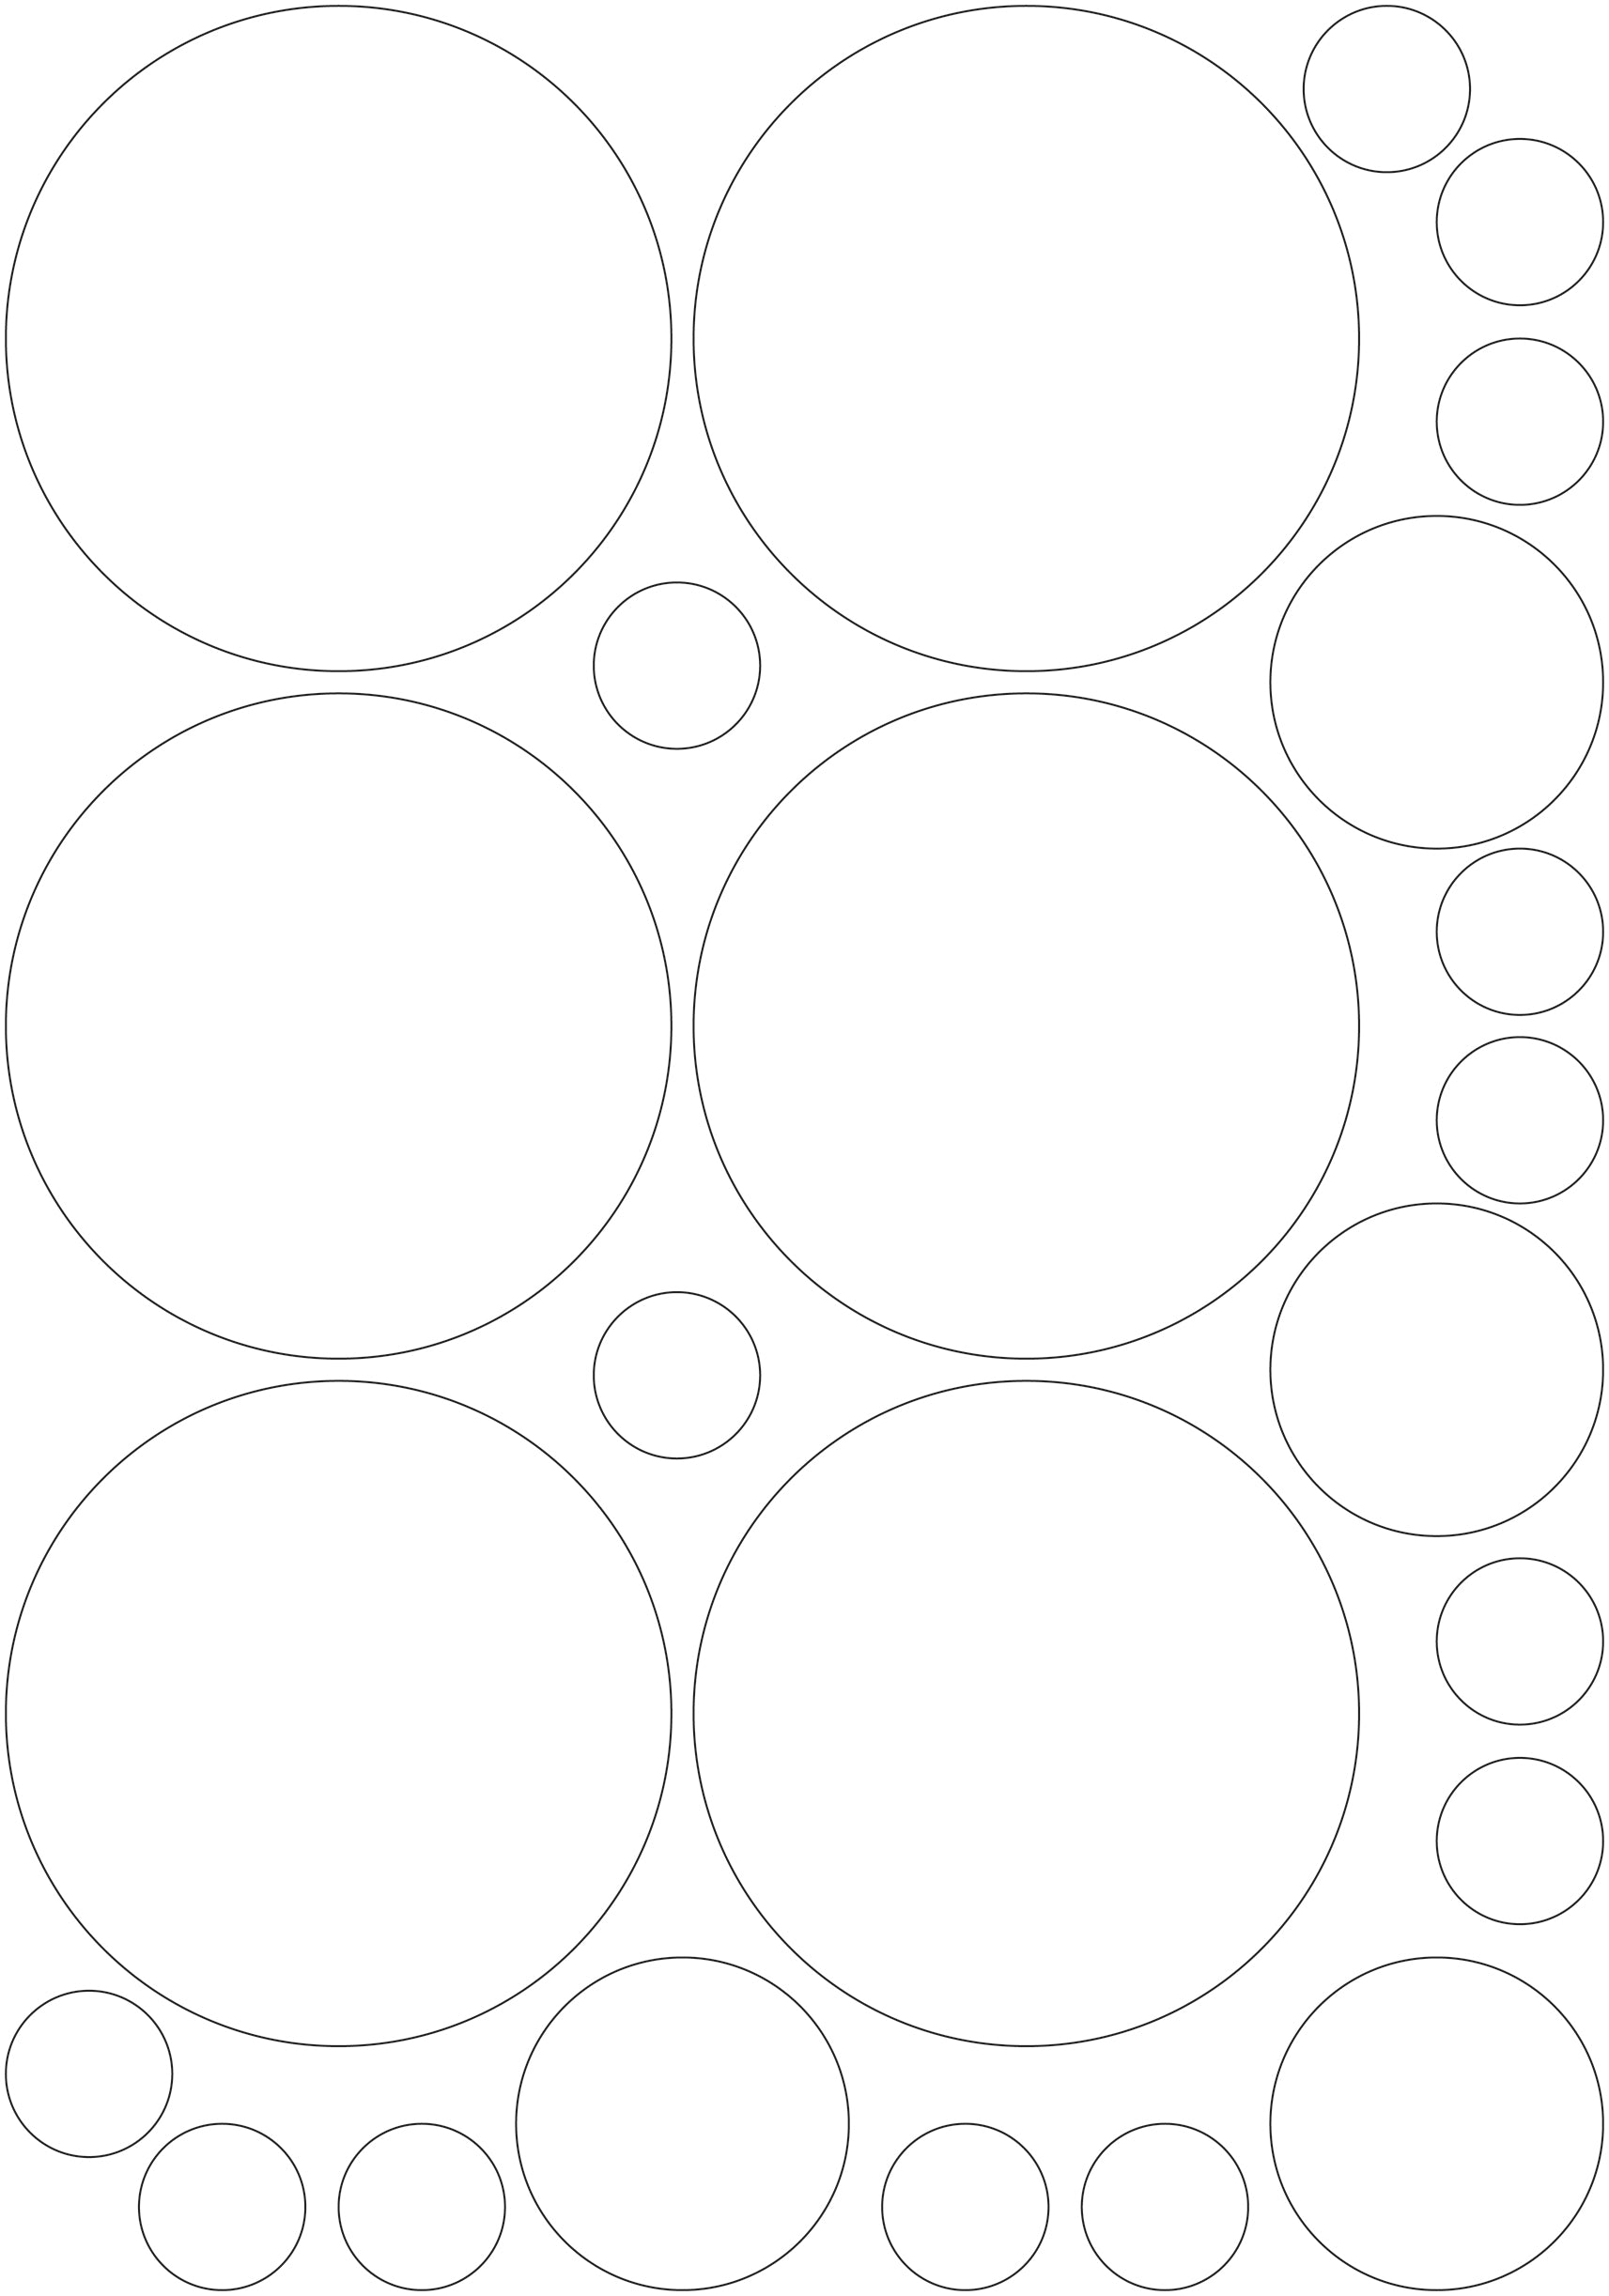 3M White/Silver Reflective Circles - A3 Sheet 120mm Circles